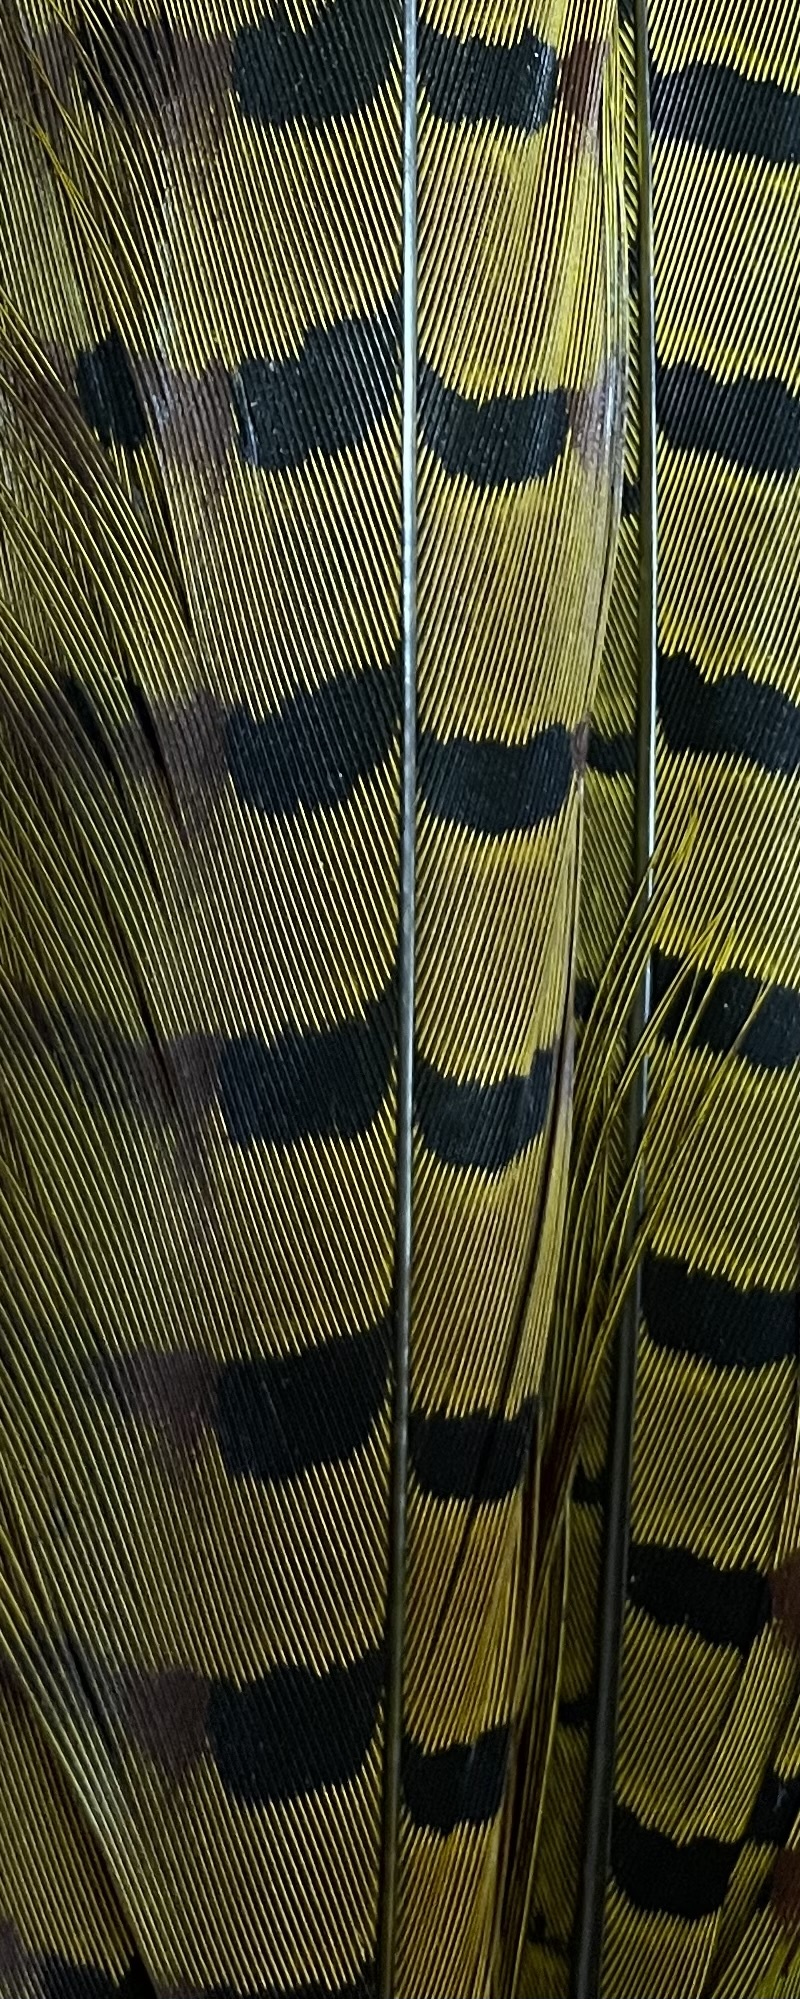 Pheasant Tail Clumps